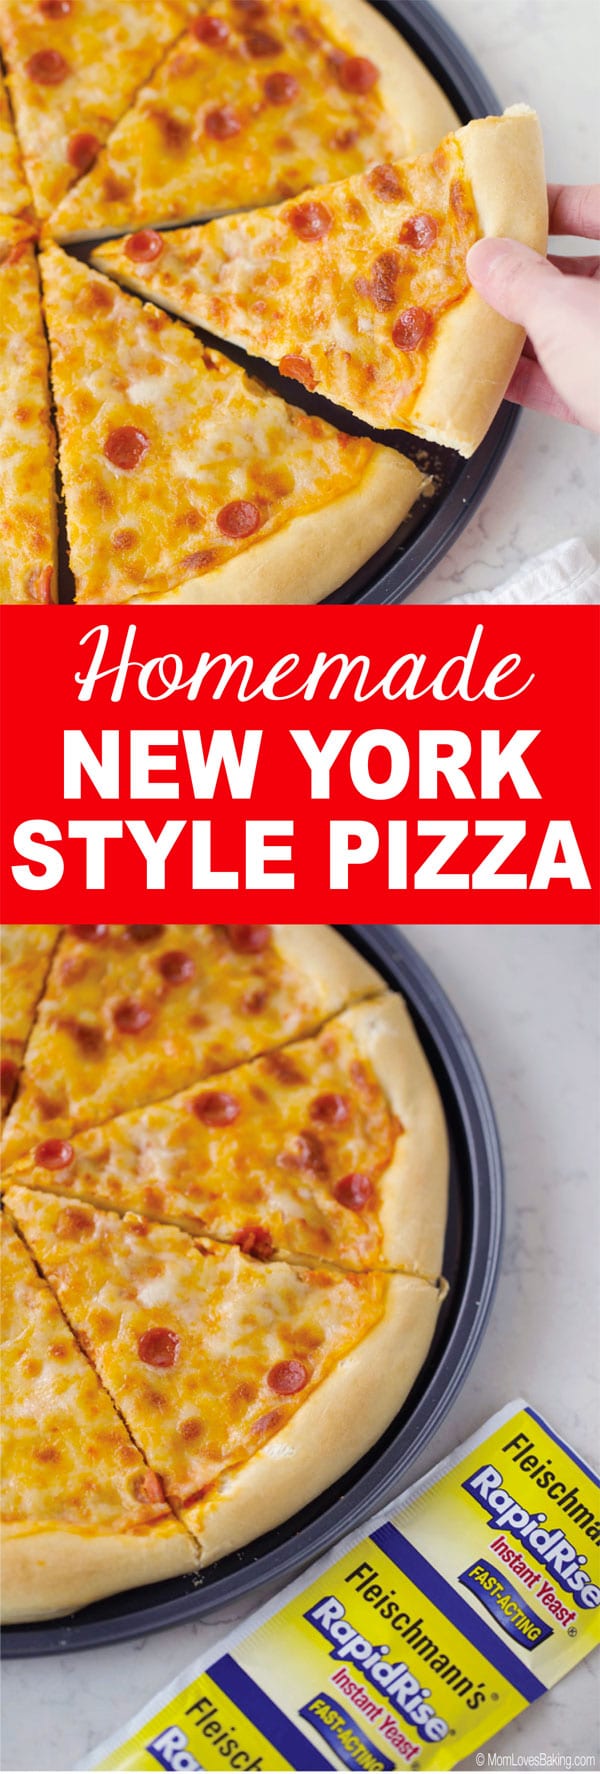 Homemade New York Style Pizza